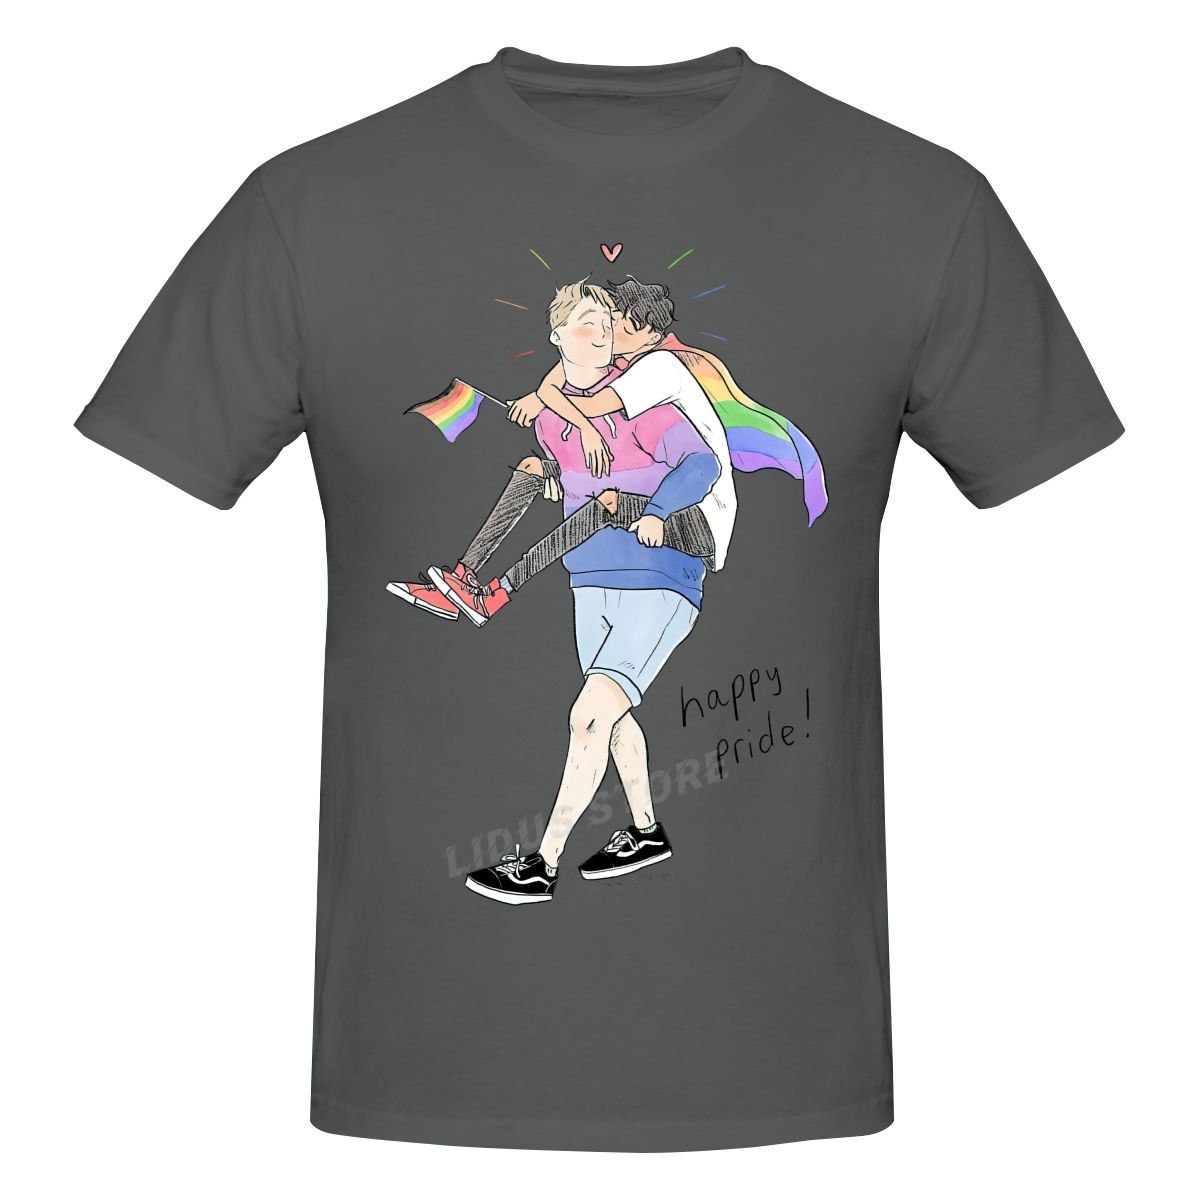 New Hot Heartstopper Graphic Nick And Charlie TV Series Fans T Shirt Clothing Graphics Tshirt Short Sleeve Sweatshirt Shirt Tee